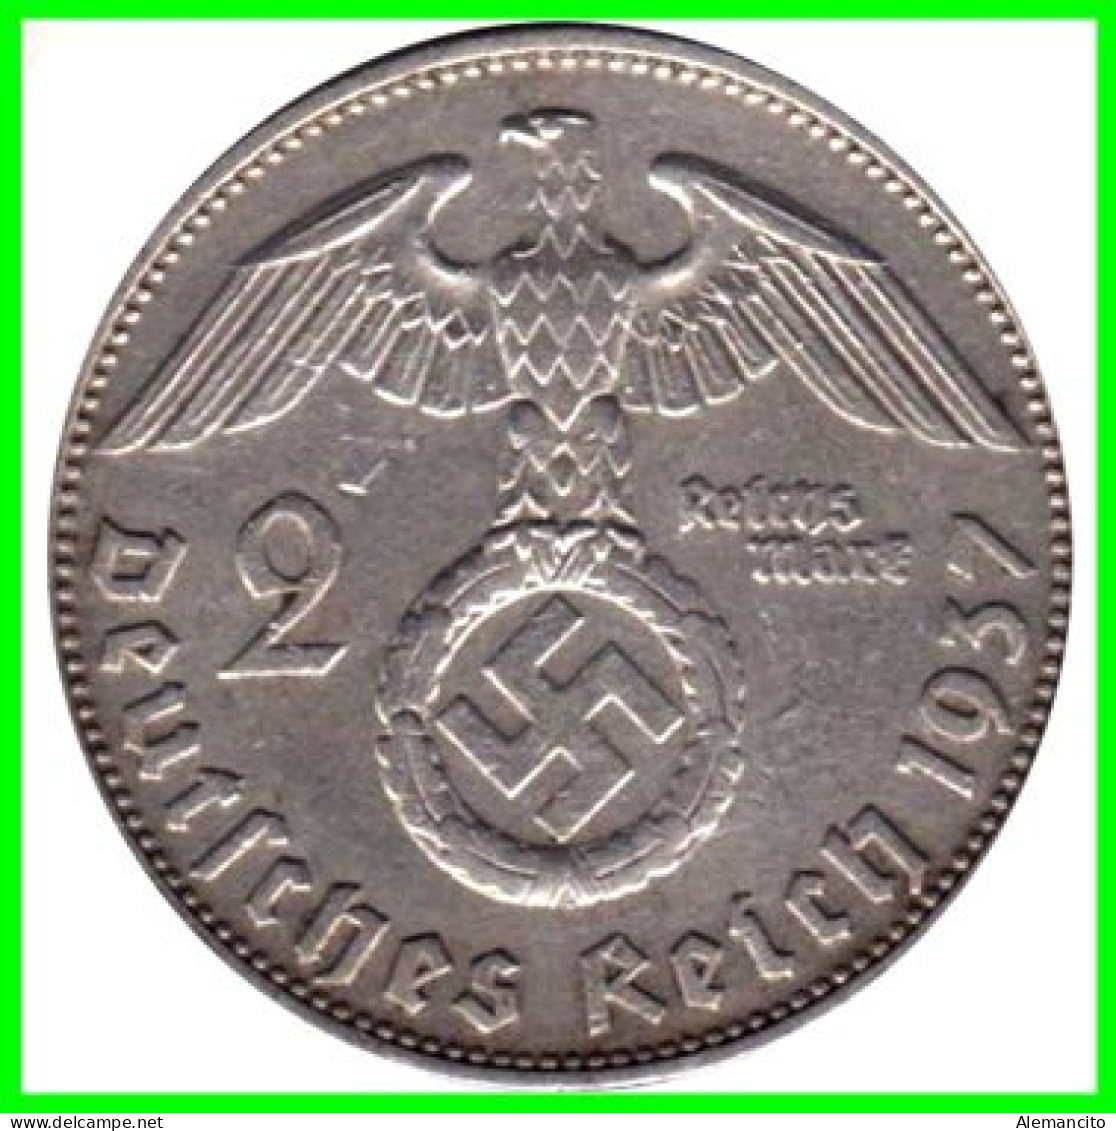 GERMANY - ALEMANIA DEUTFCHES REICH SERIE COMPLETA MONEDAS DE 2.00 REICHSMARK AÑO 1937  MONEDA DE PLATA –ESBALTICA - 2 Reichsmark